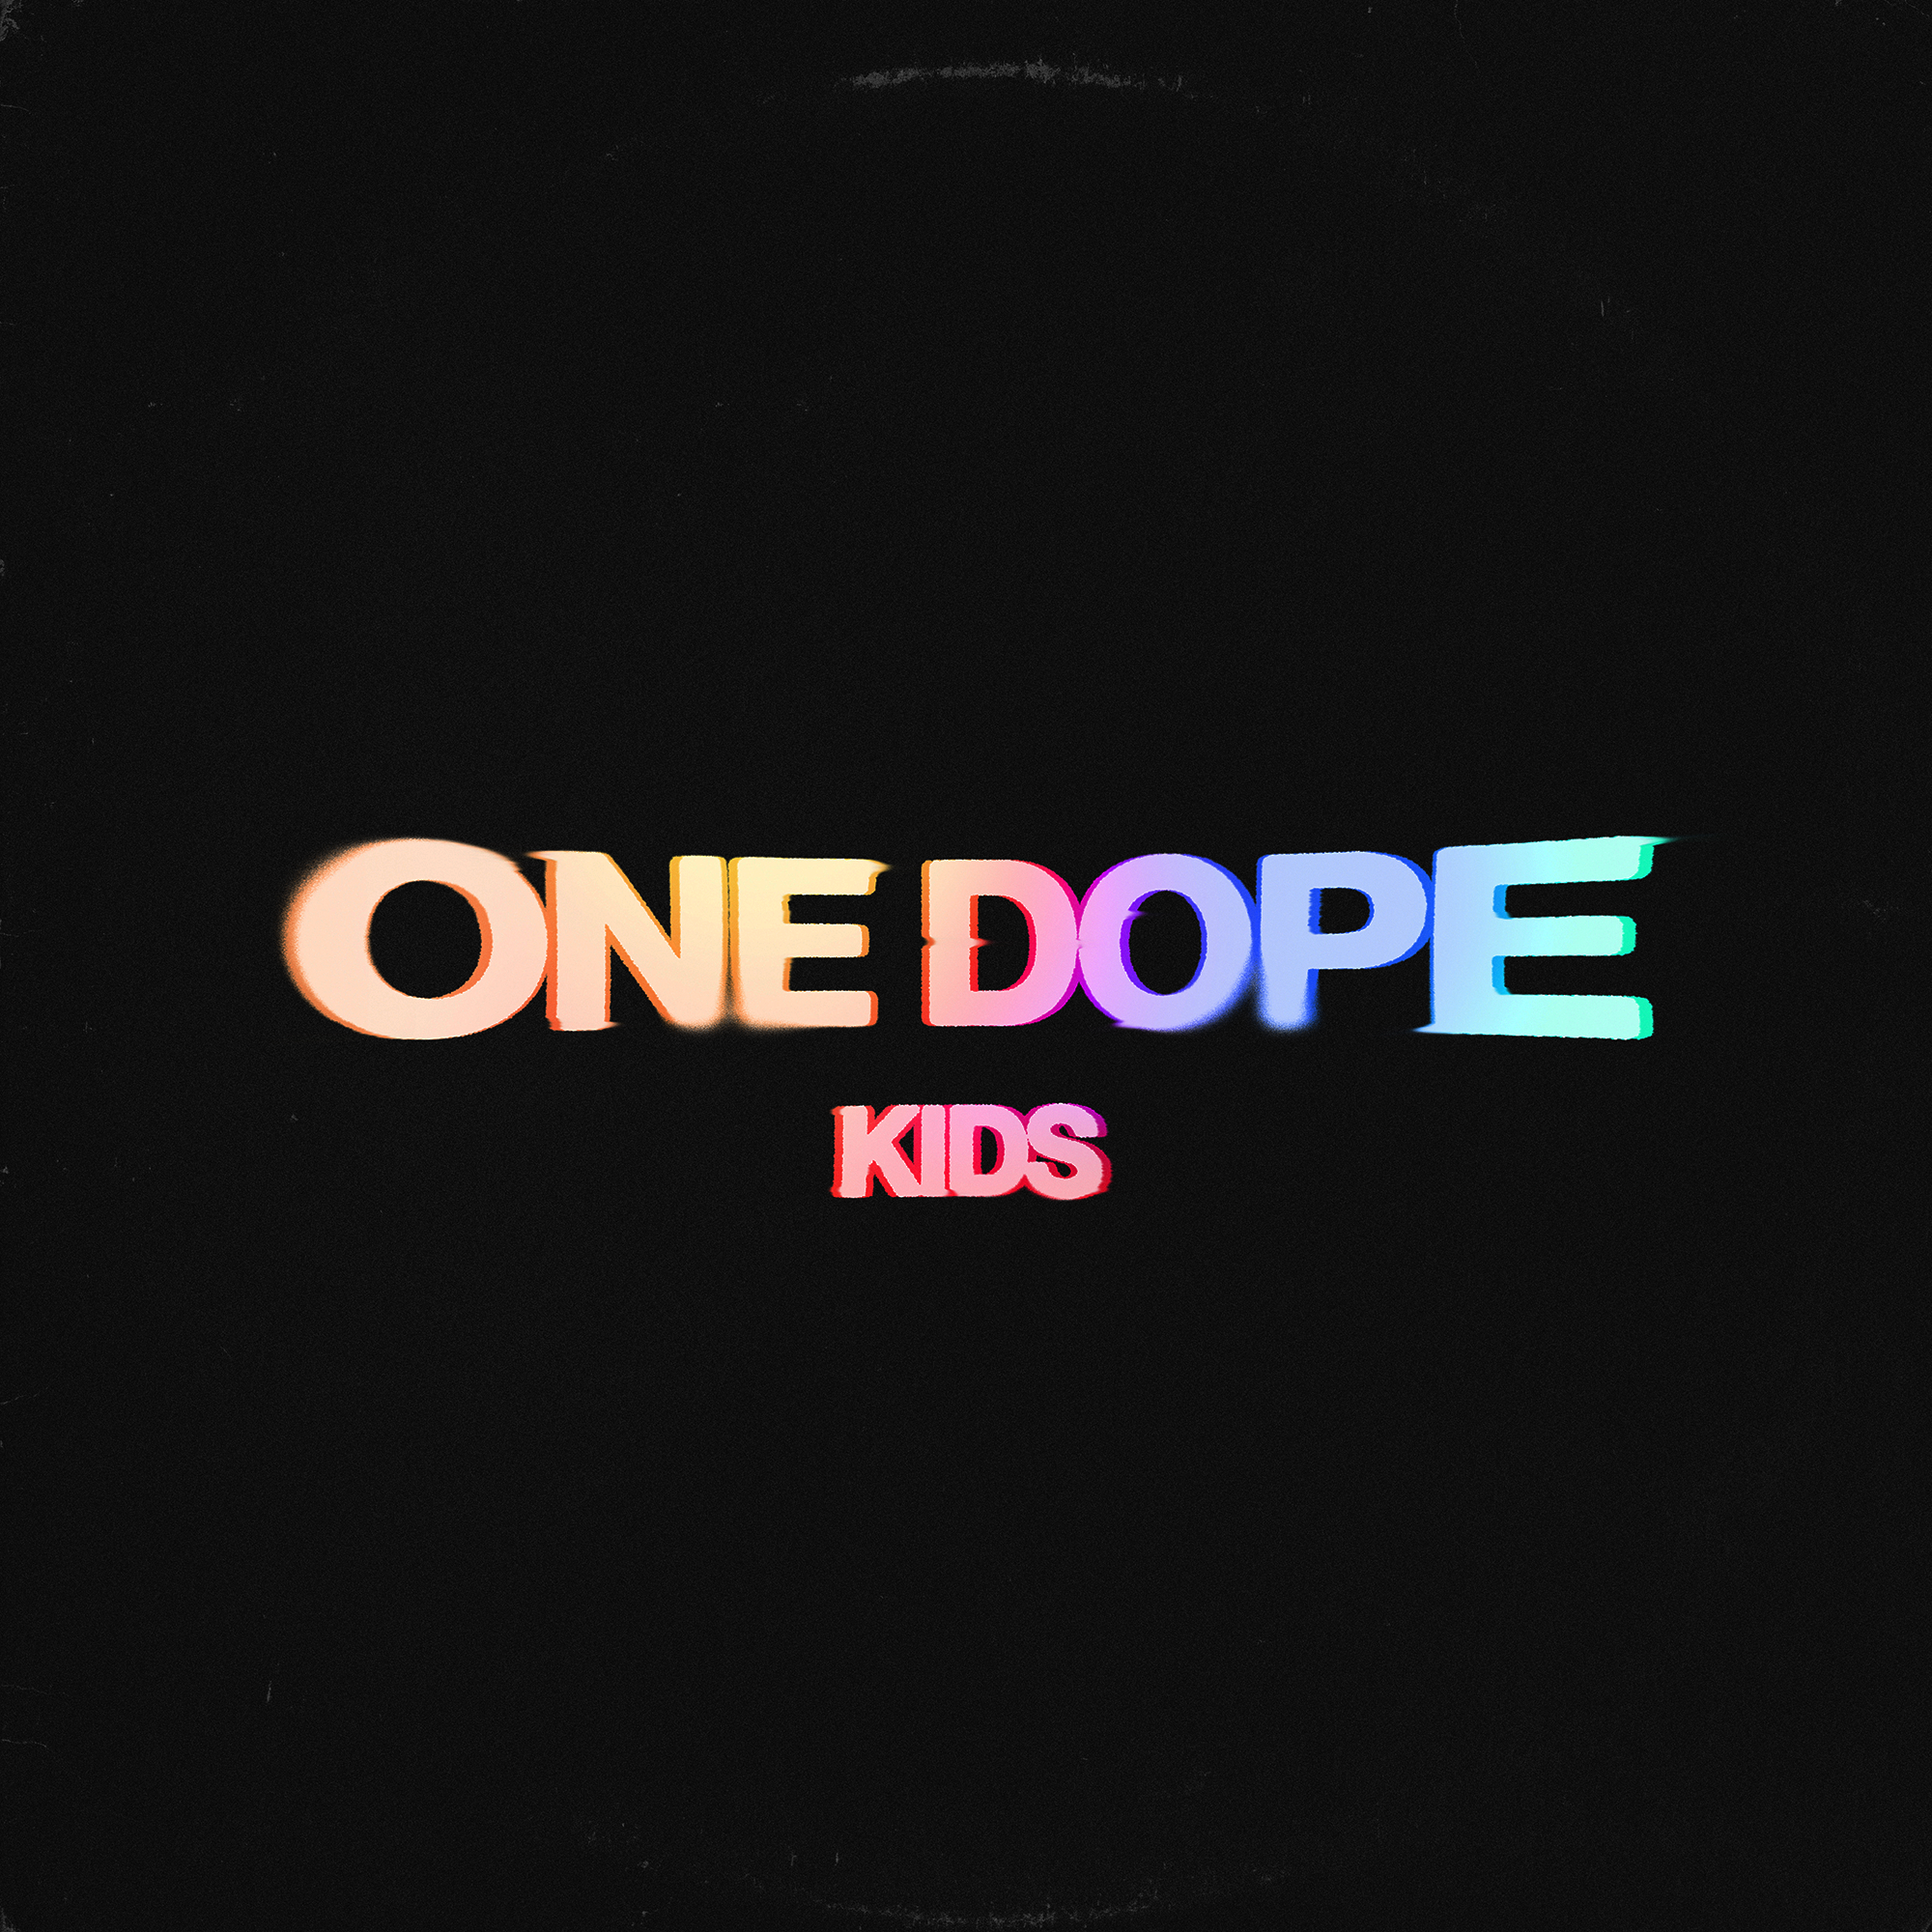 most dope kid logo